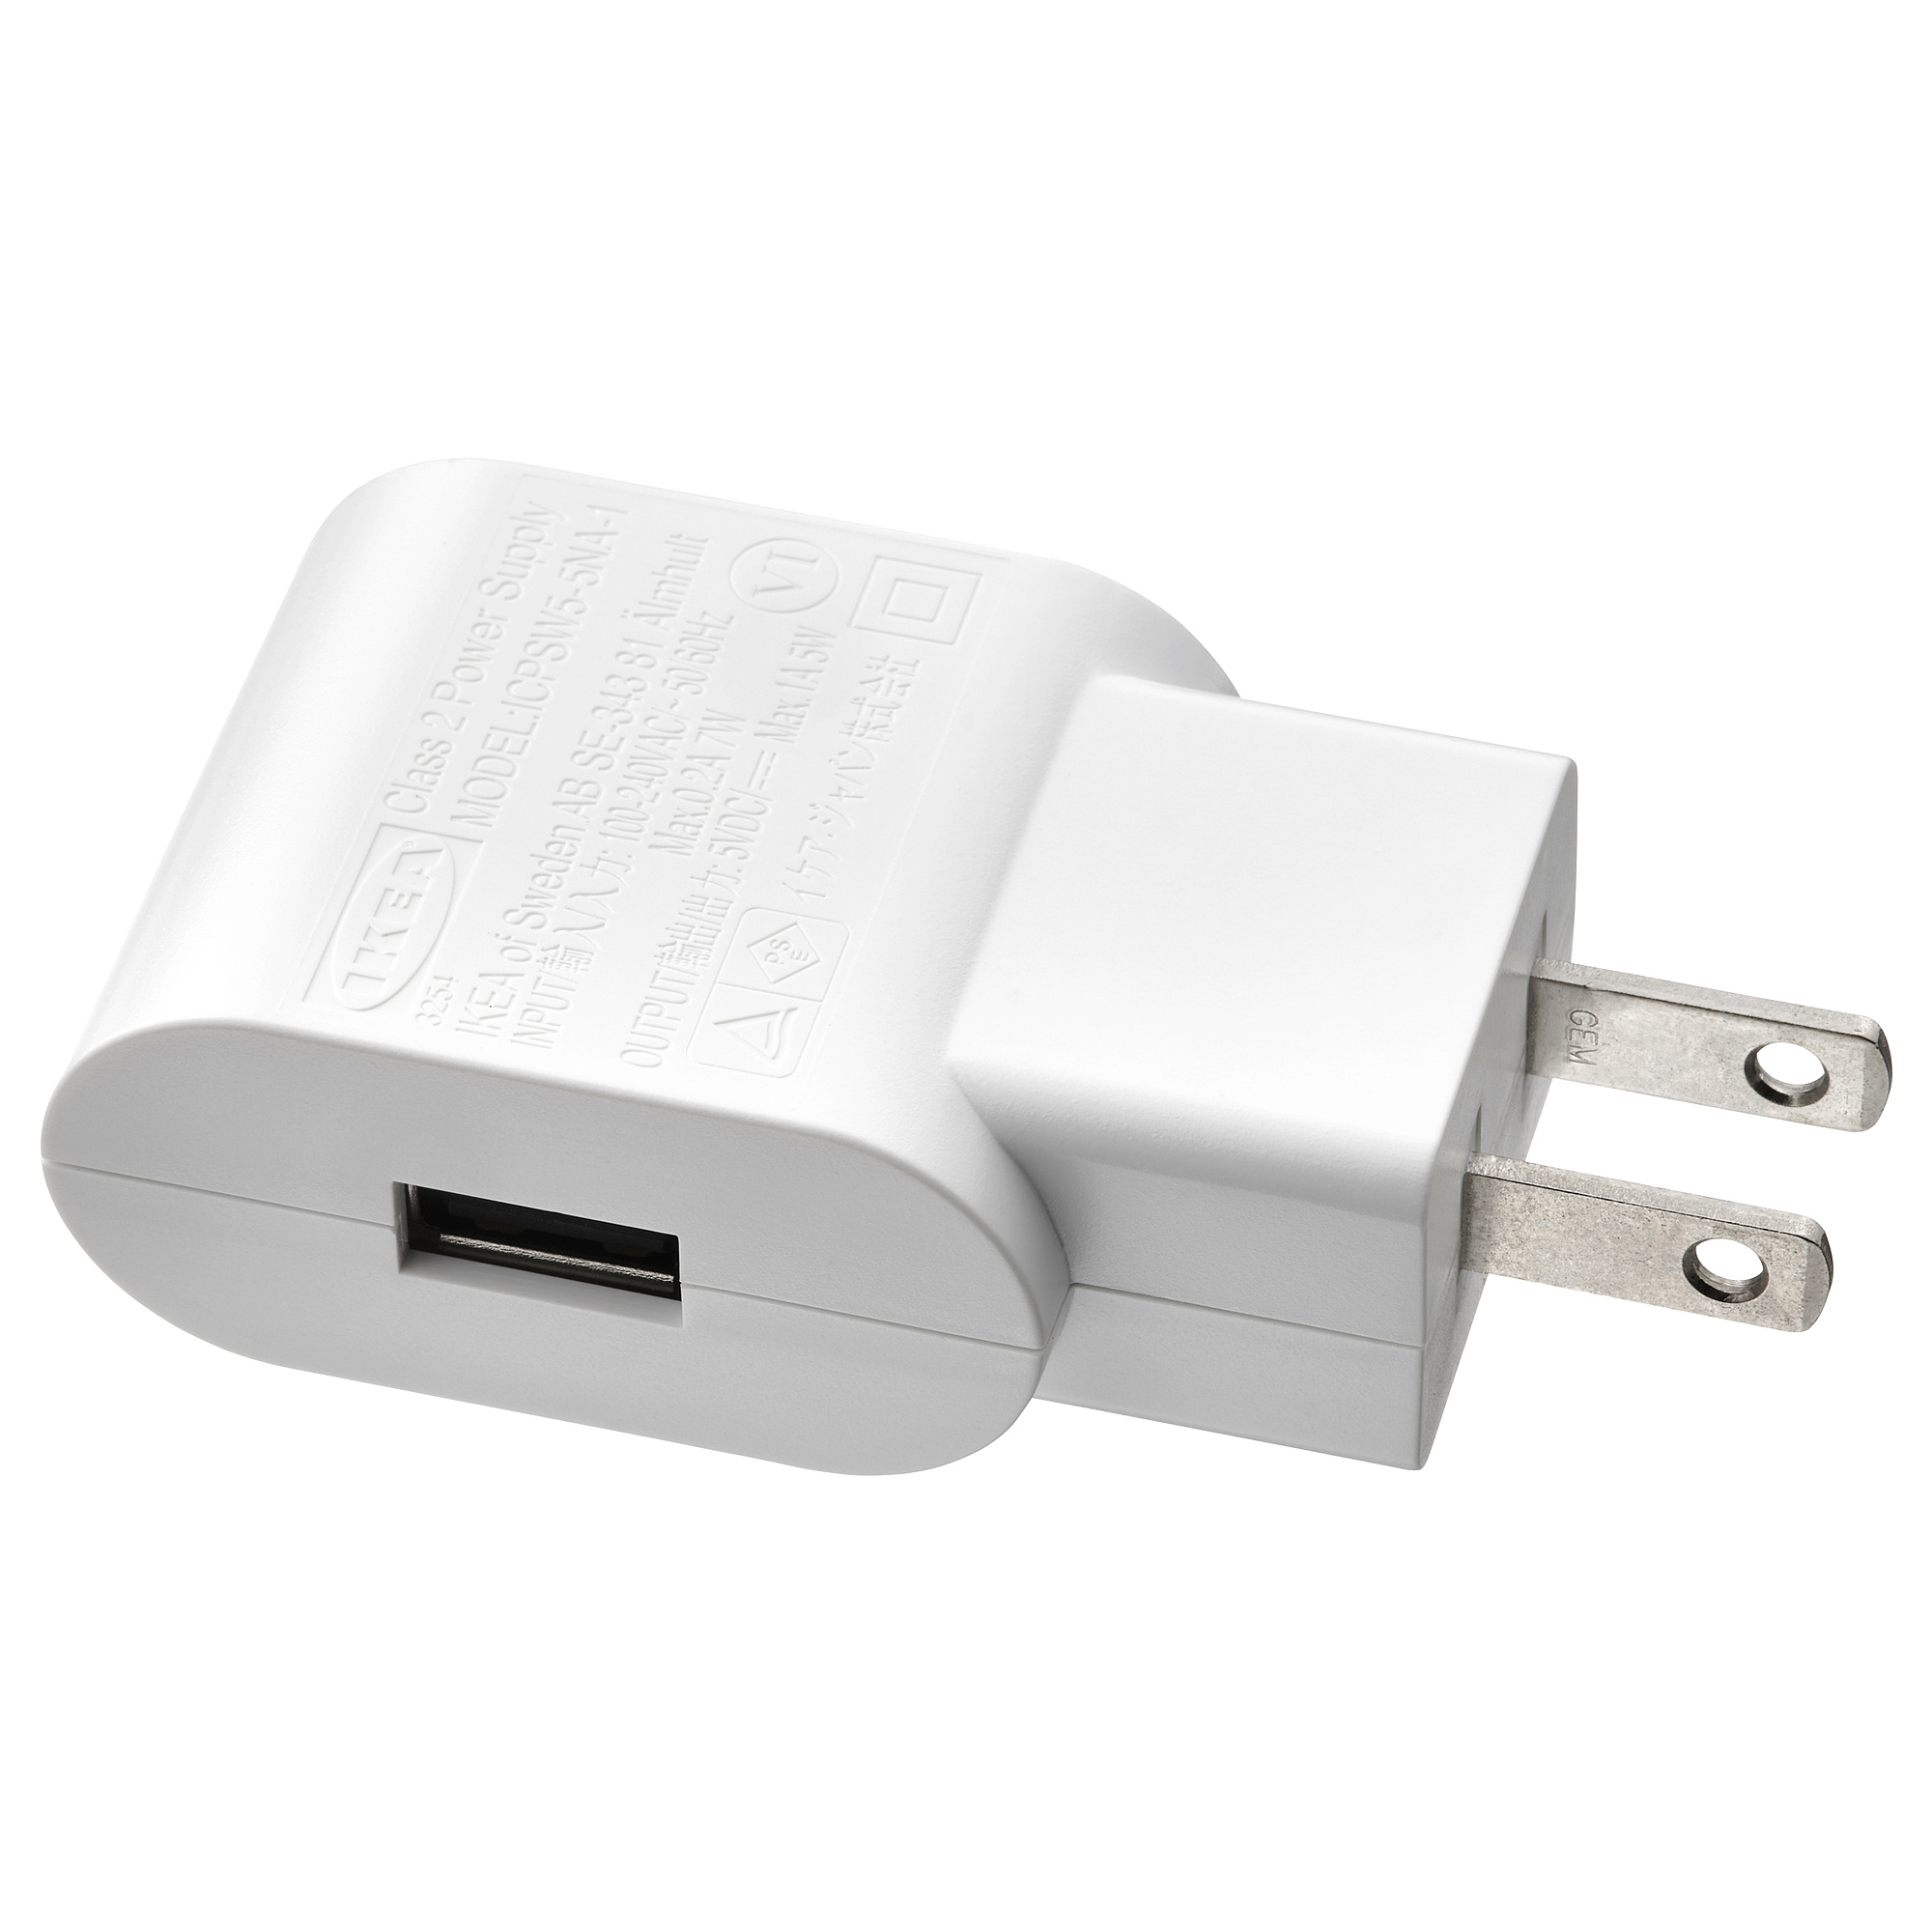 SMÅHAGEL 1-port USB charger